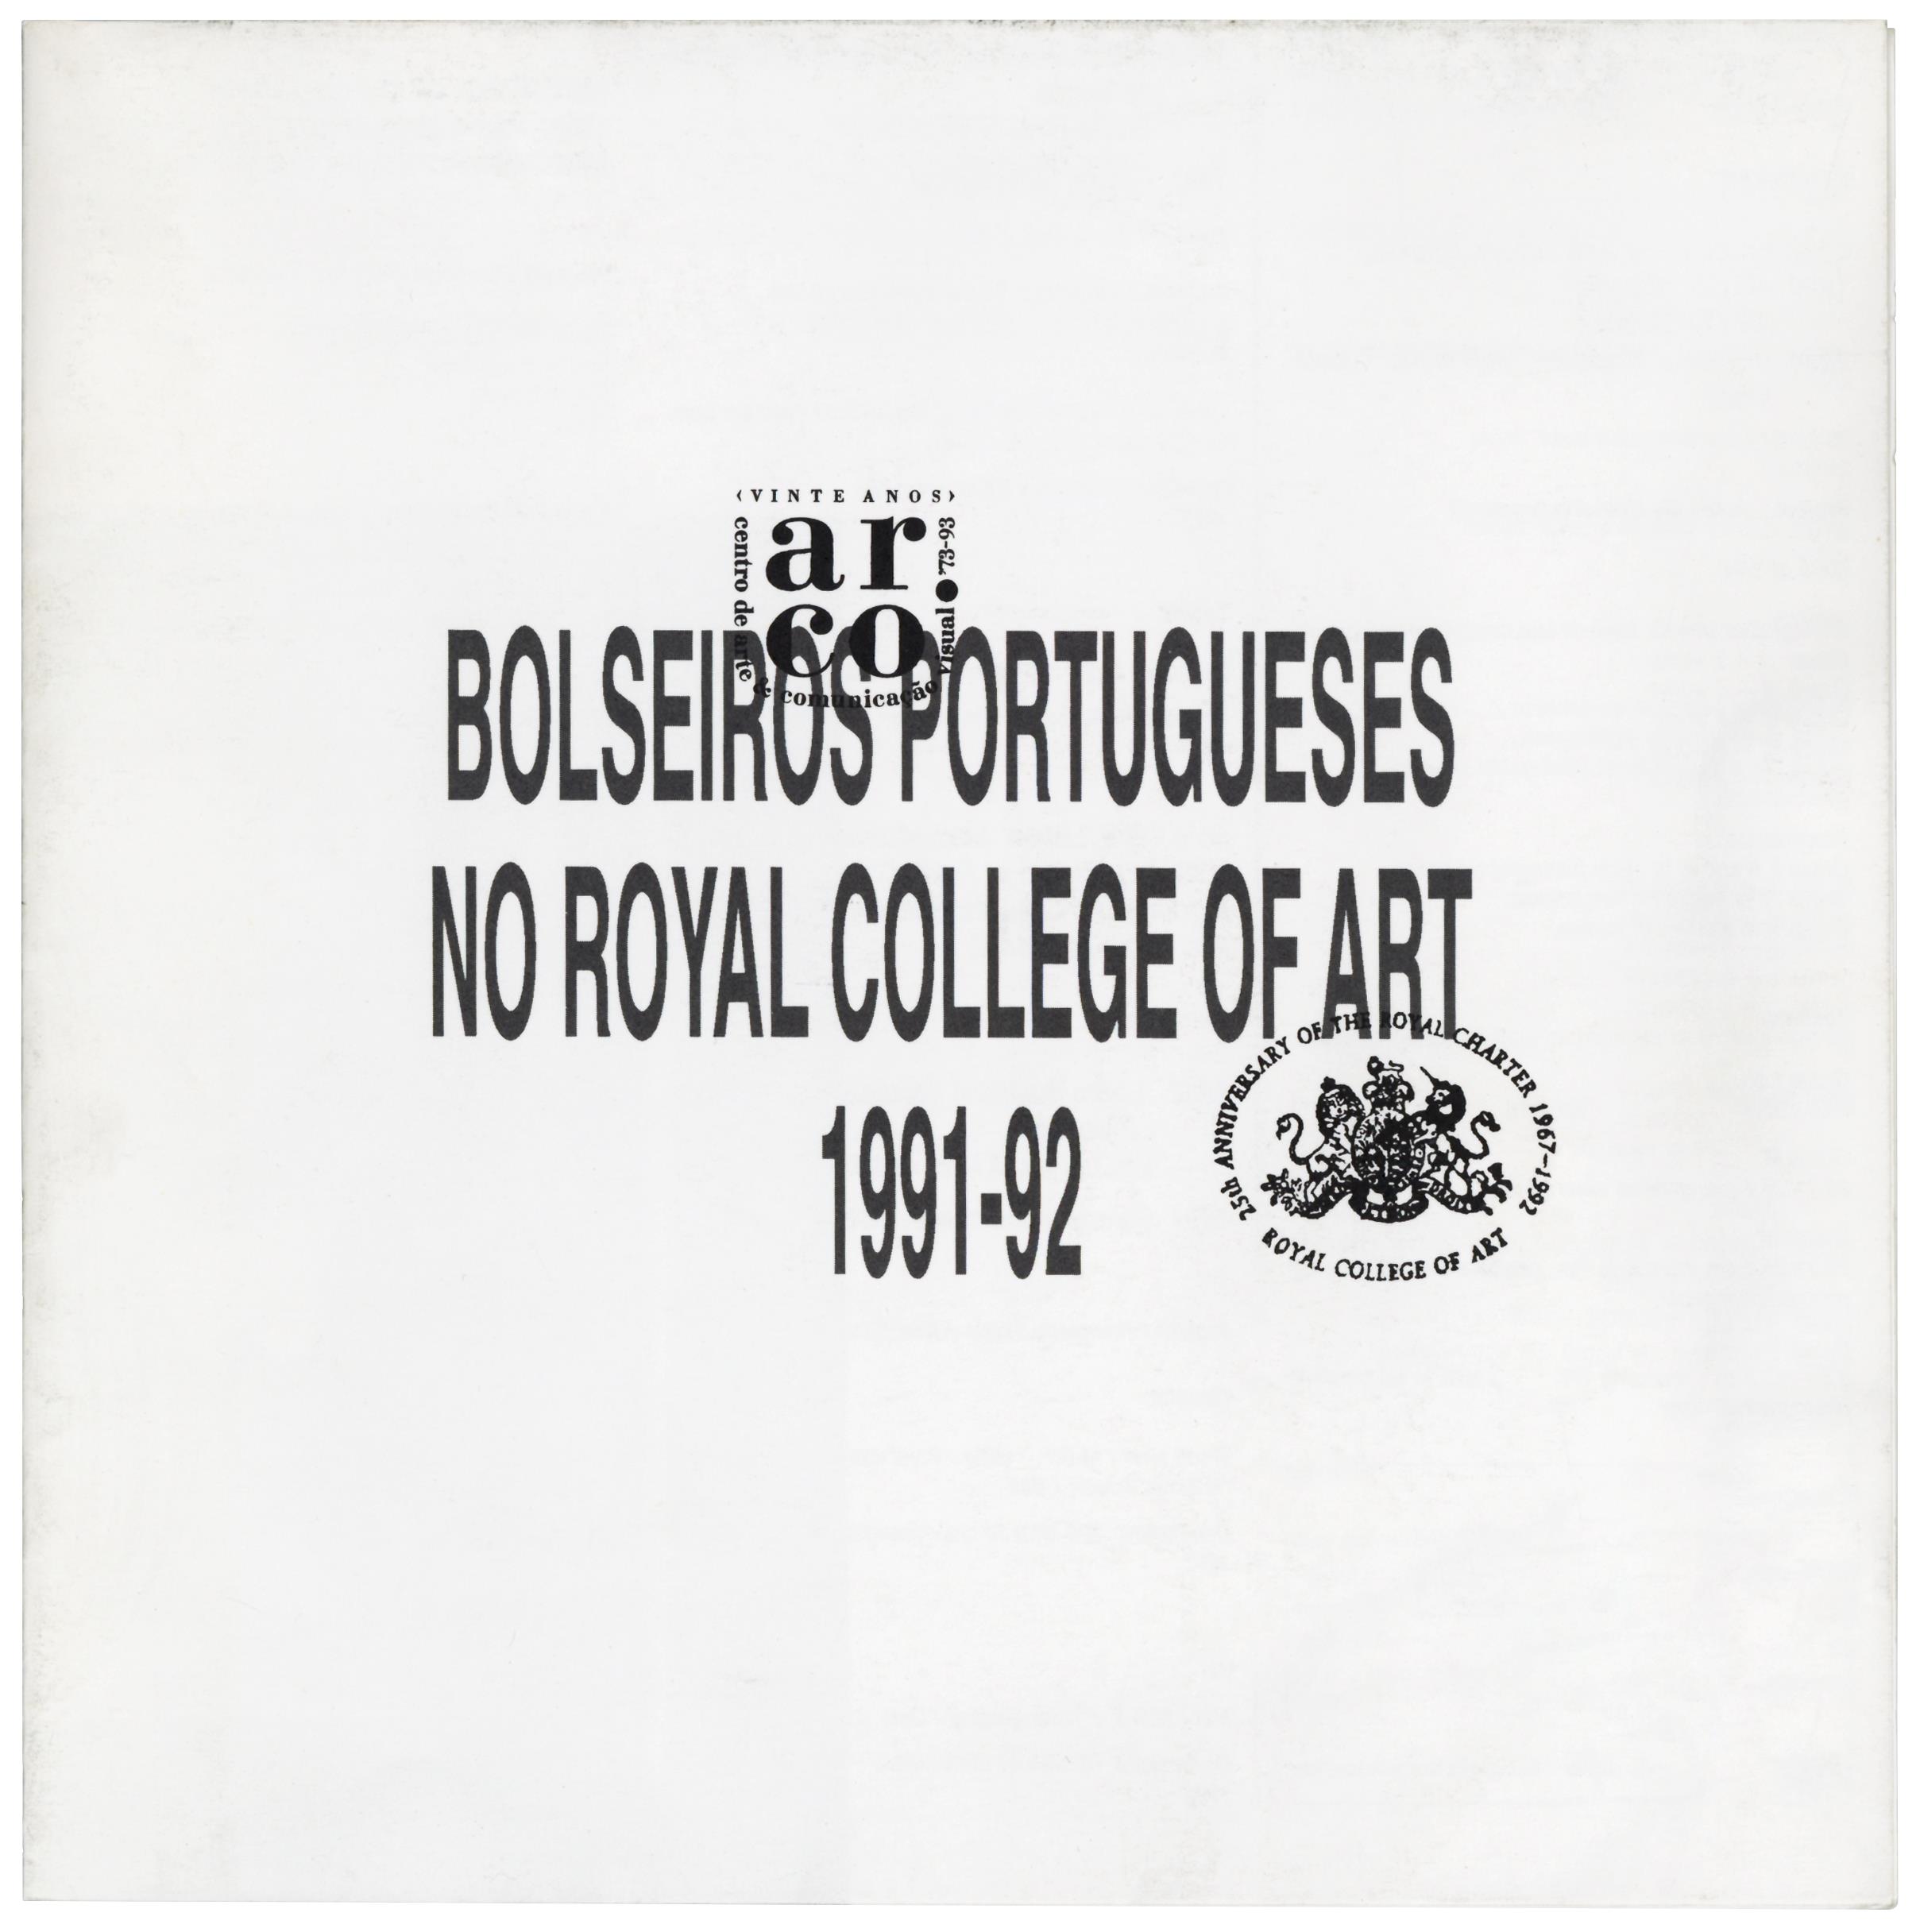 Bolseiros Portugueses no Royal College of Art, 1991 – 1992